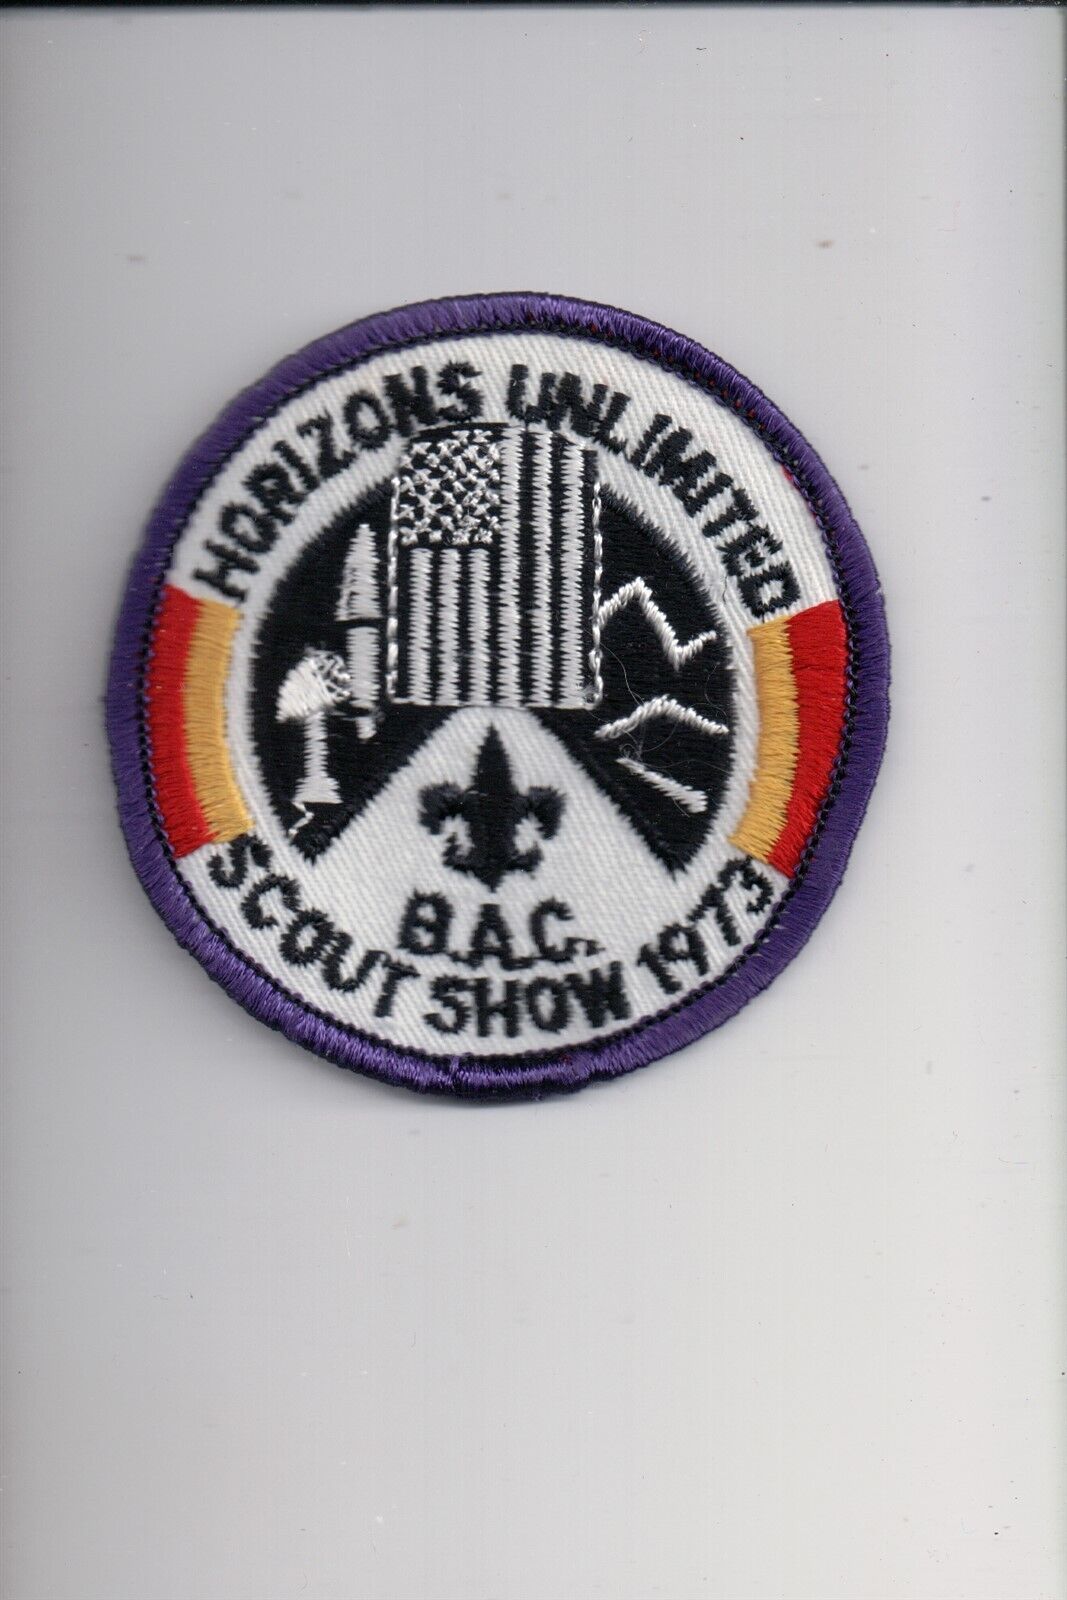 1973 BAC Horizons Unlimited Scout Show ptch